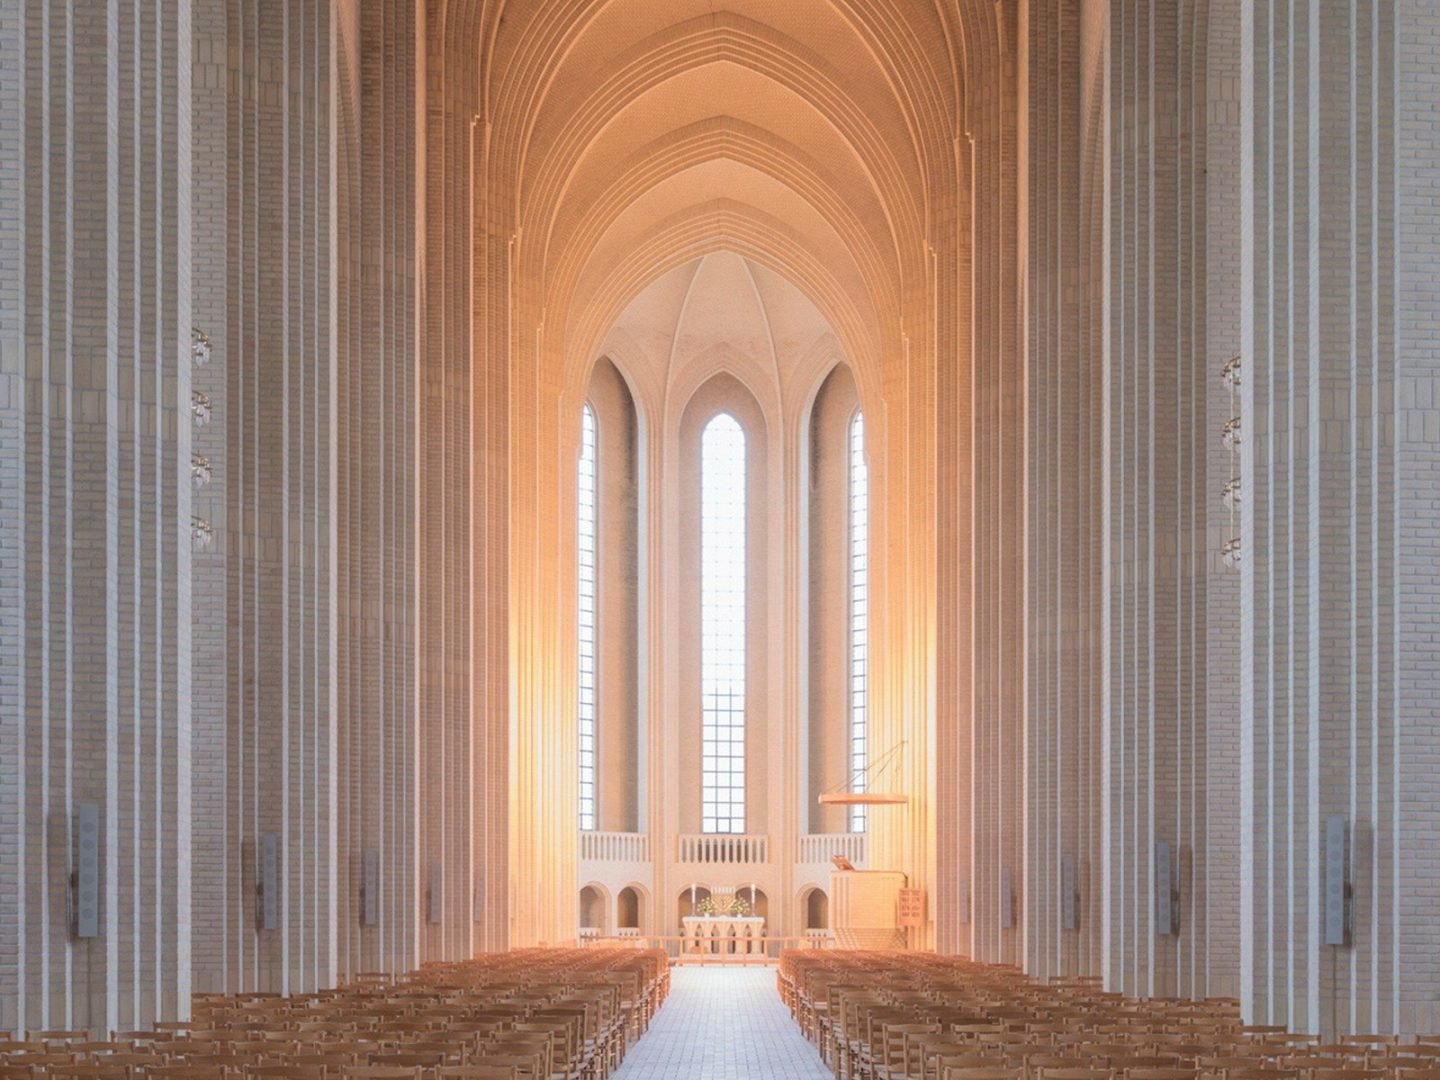 ignant-photography-ludwig-favre-copenhagen-church-04